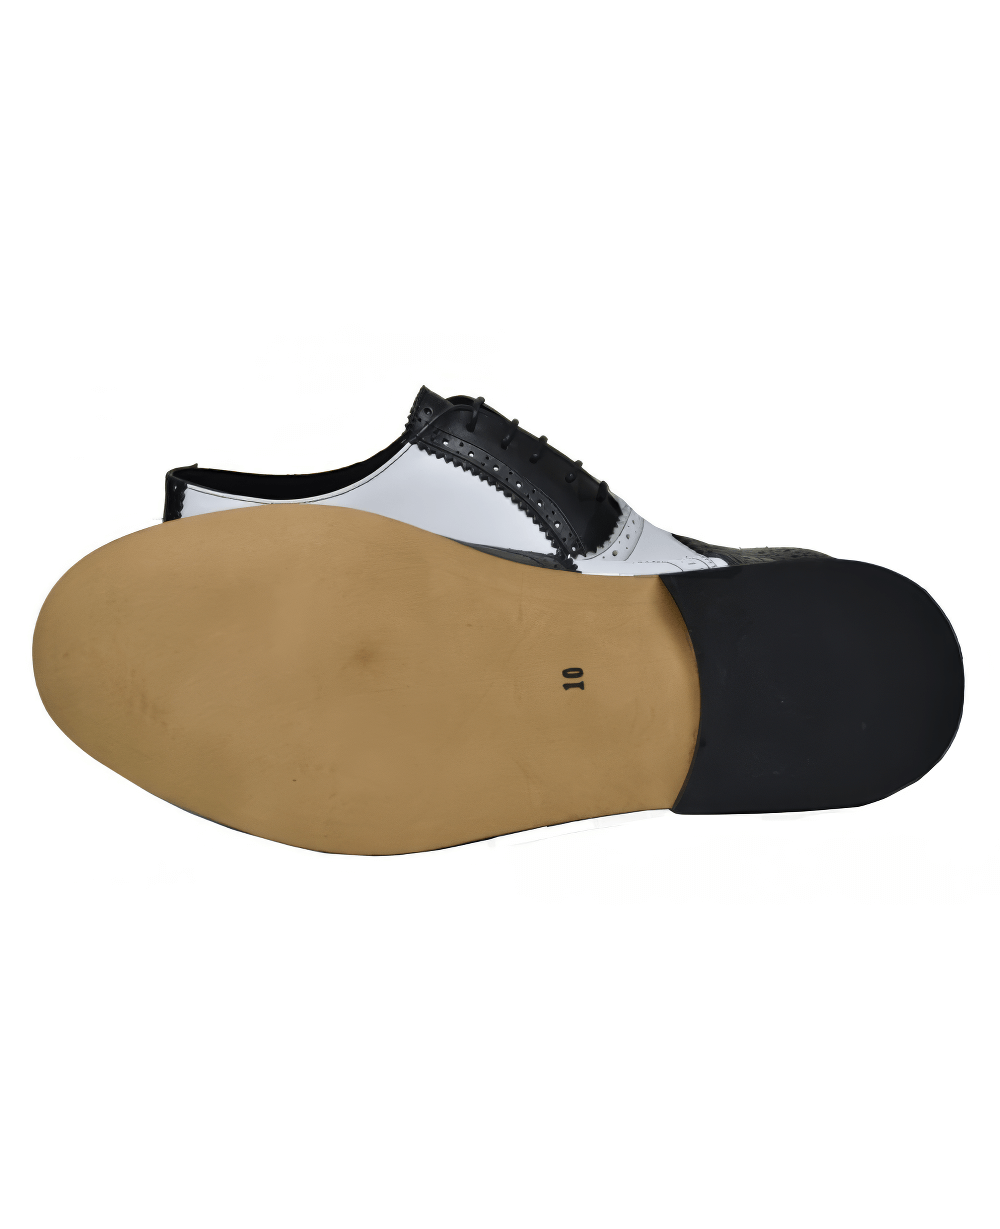 Men's Sleek Monochrome Oxford Shoes with Round Toe